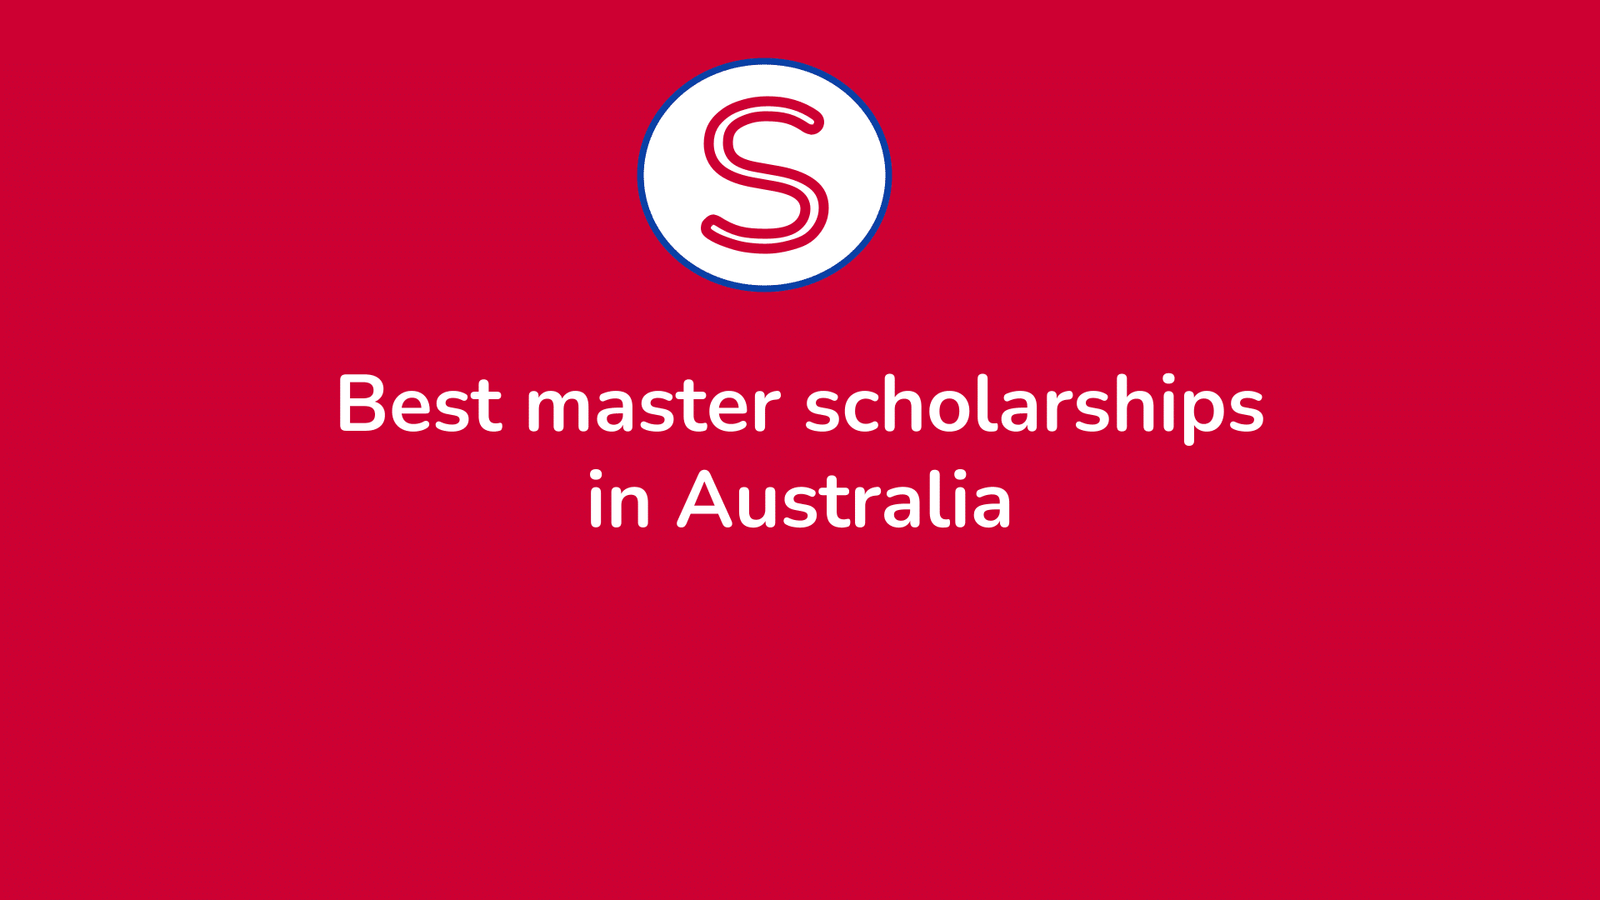 The 11 best master scholarships in Australia